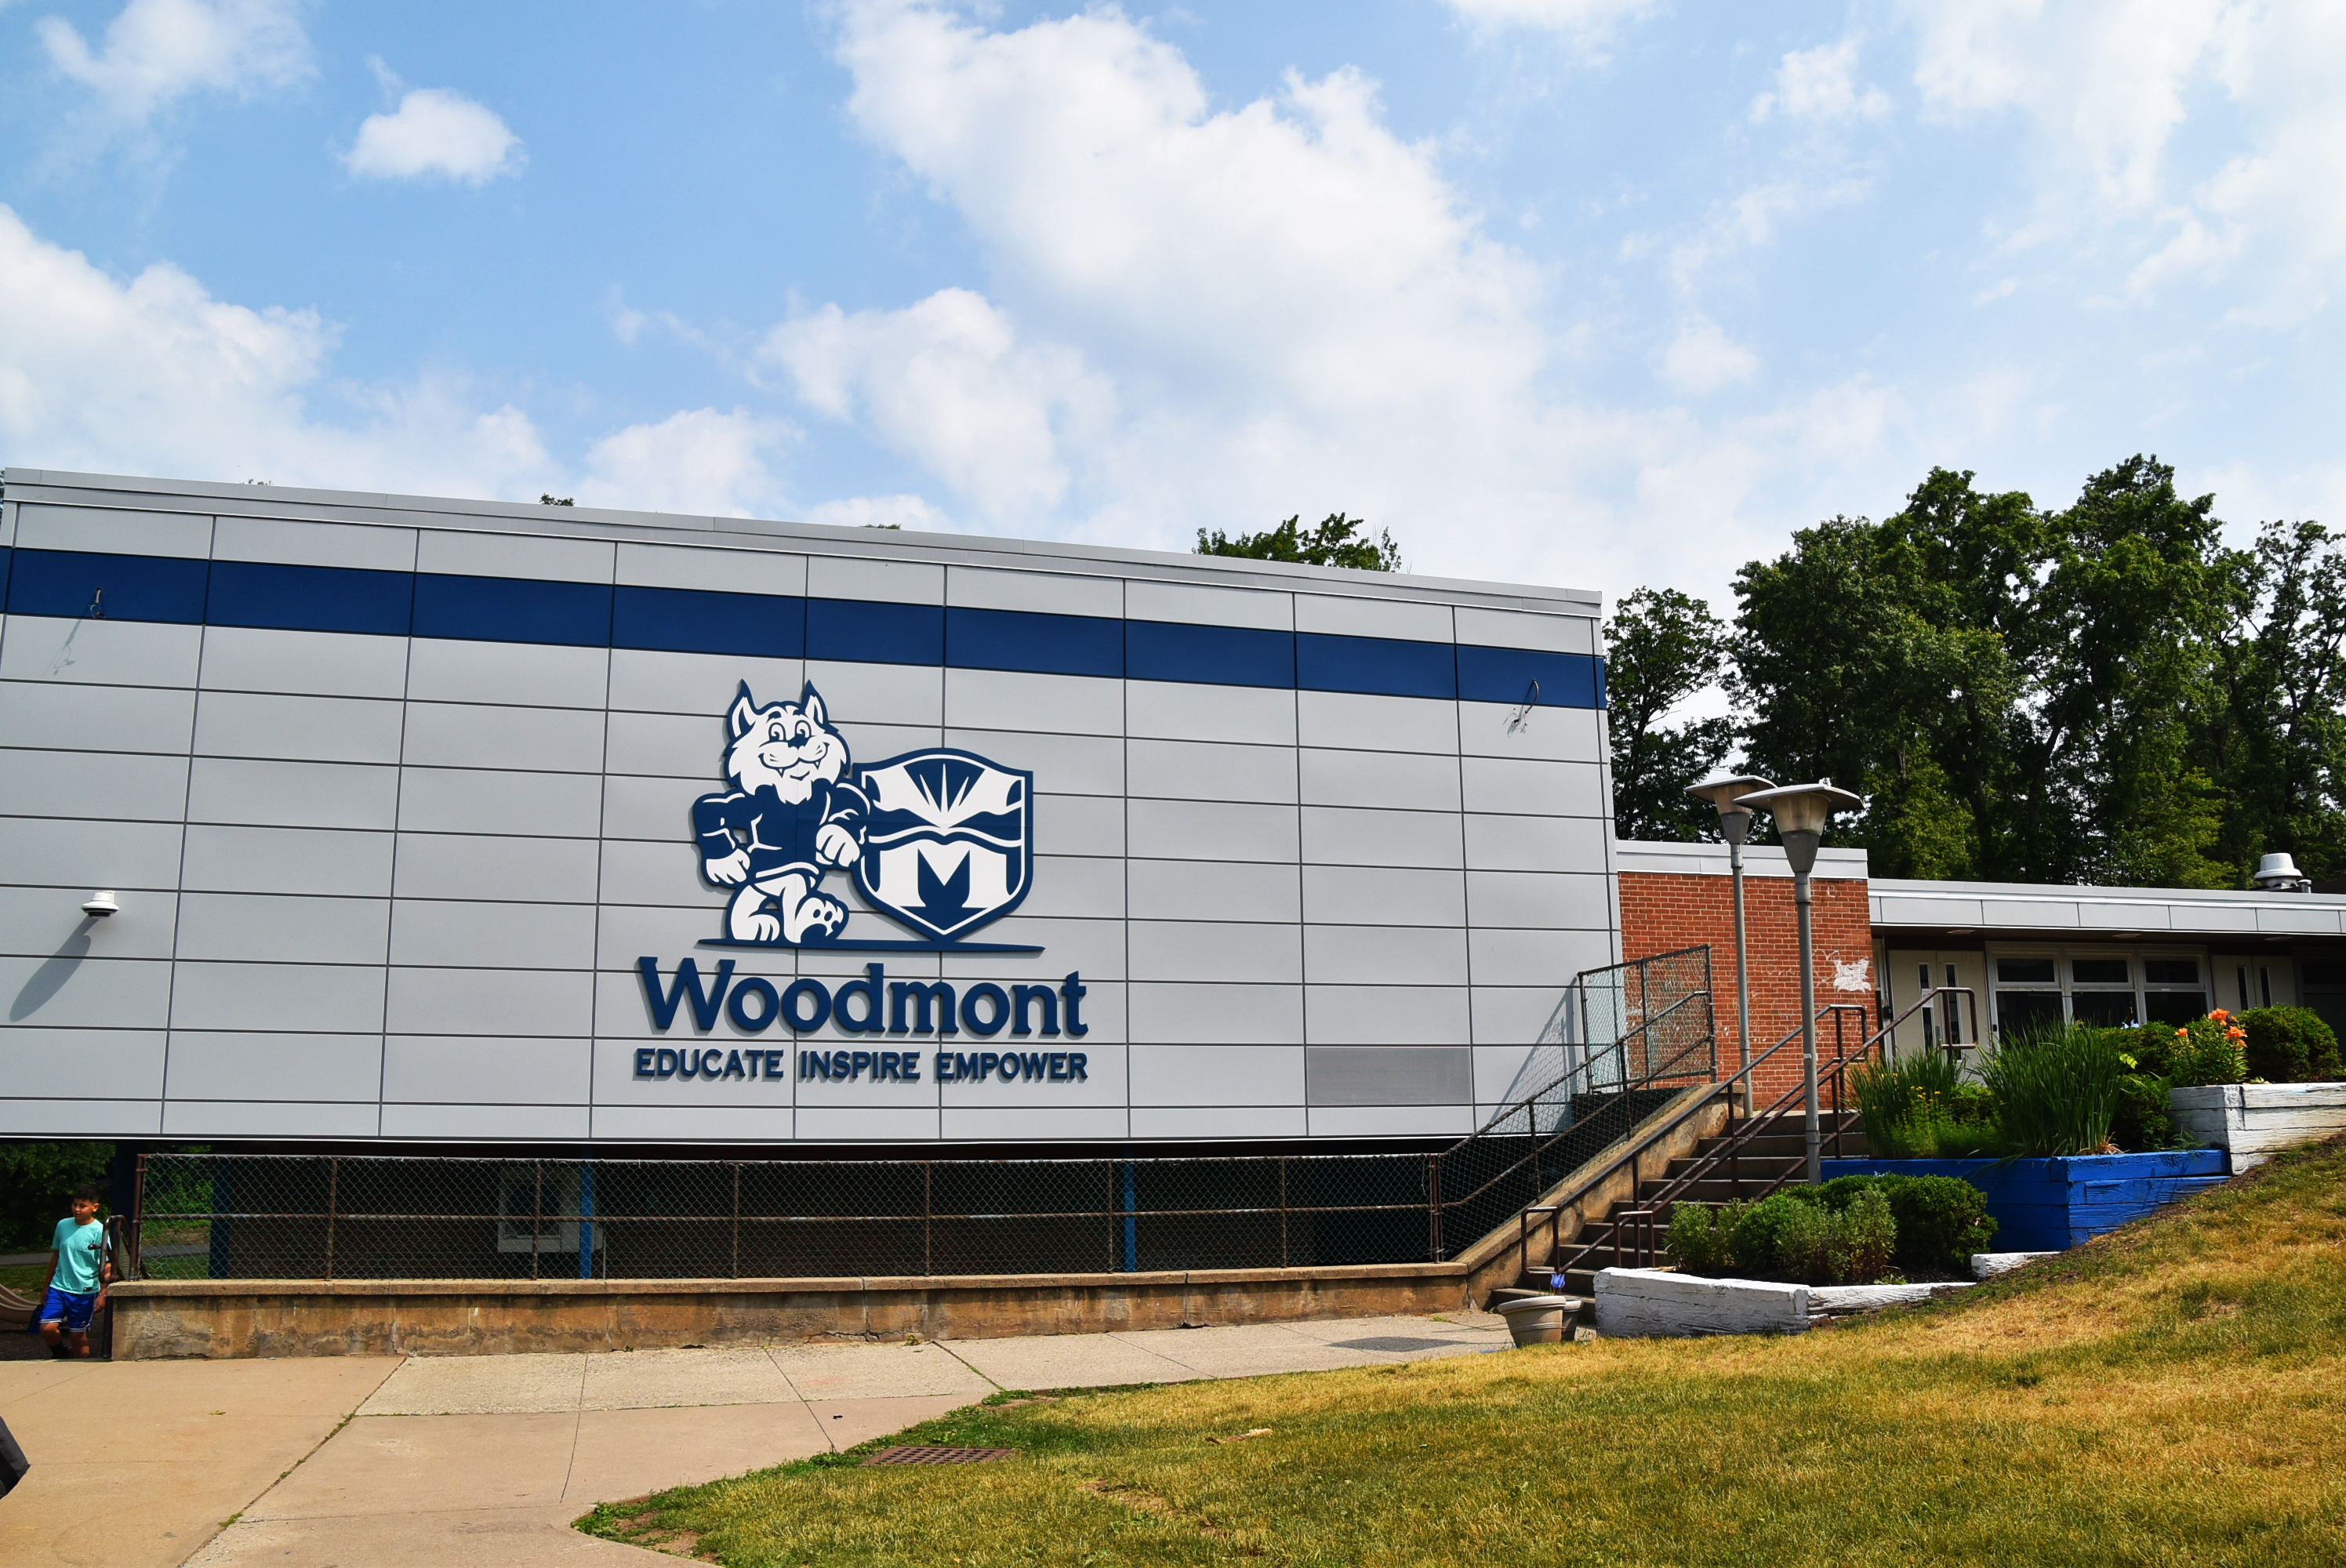 Woodmont Elementary School building